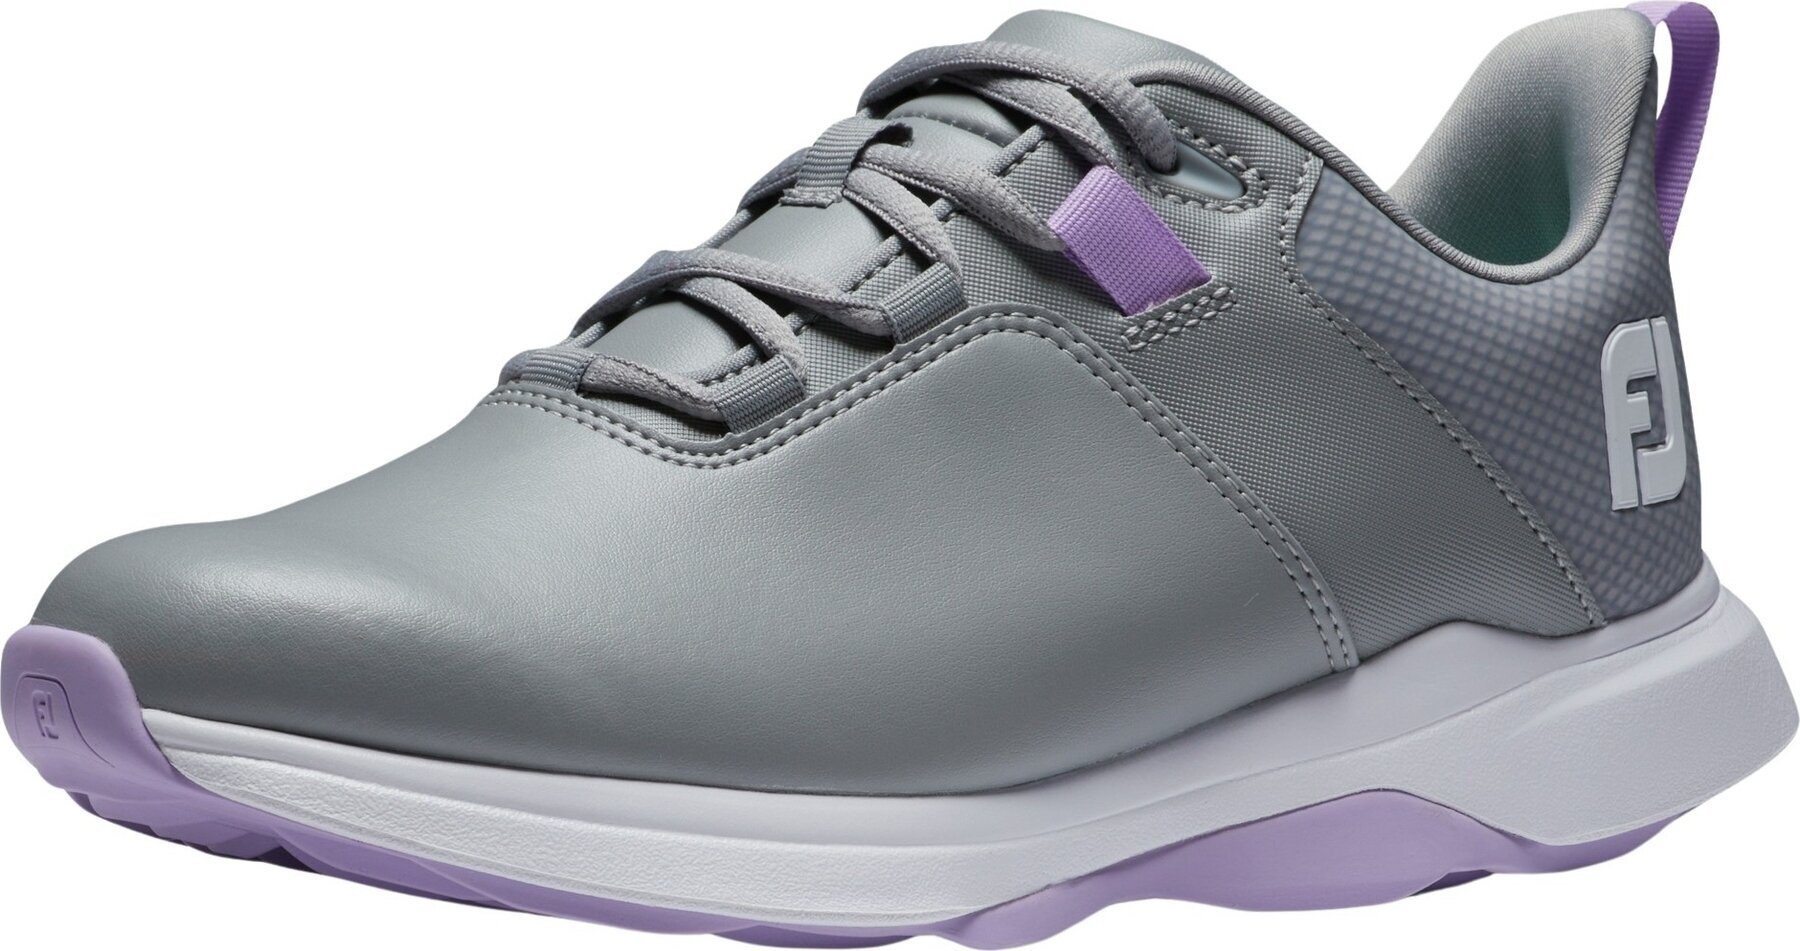 Footjoy ProLite Womens Golf Shoes Grey/Lilac 40,5